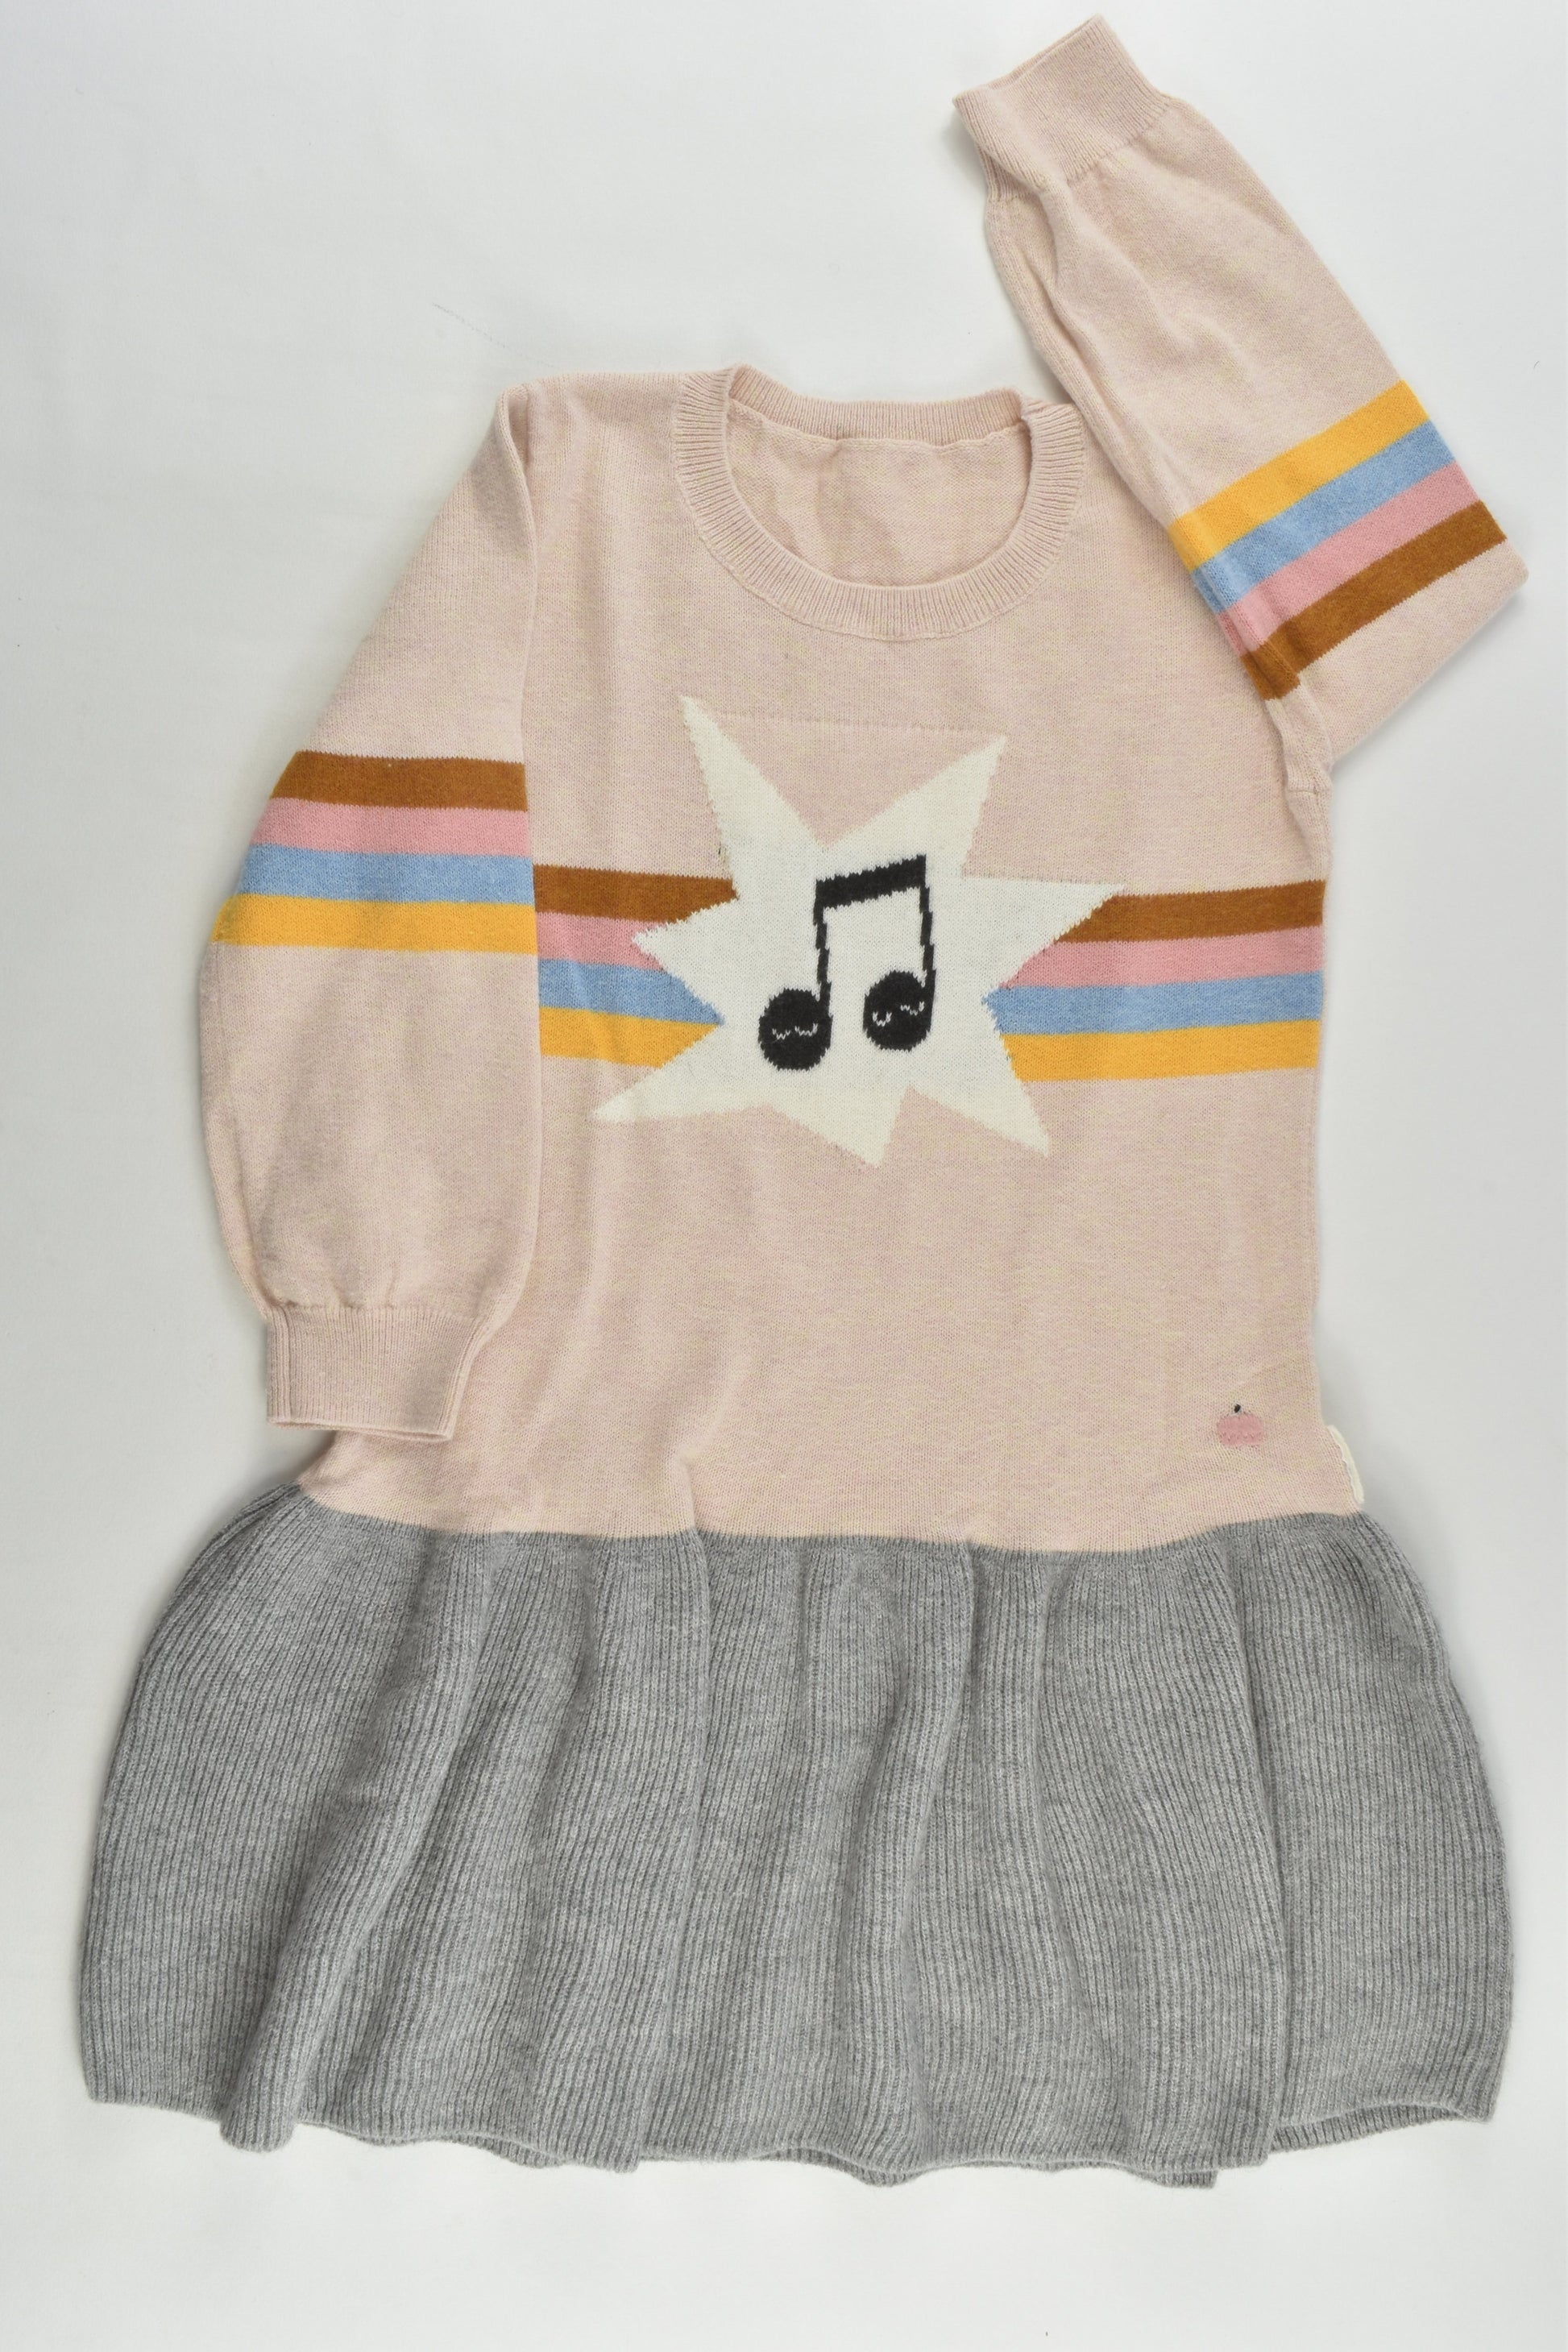 The Bonnie Mob Size 2-3 (100 cm) Musical Note Knit Dress